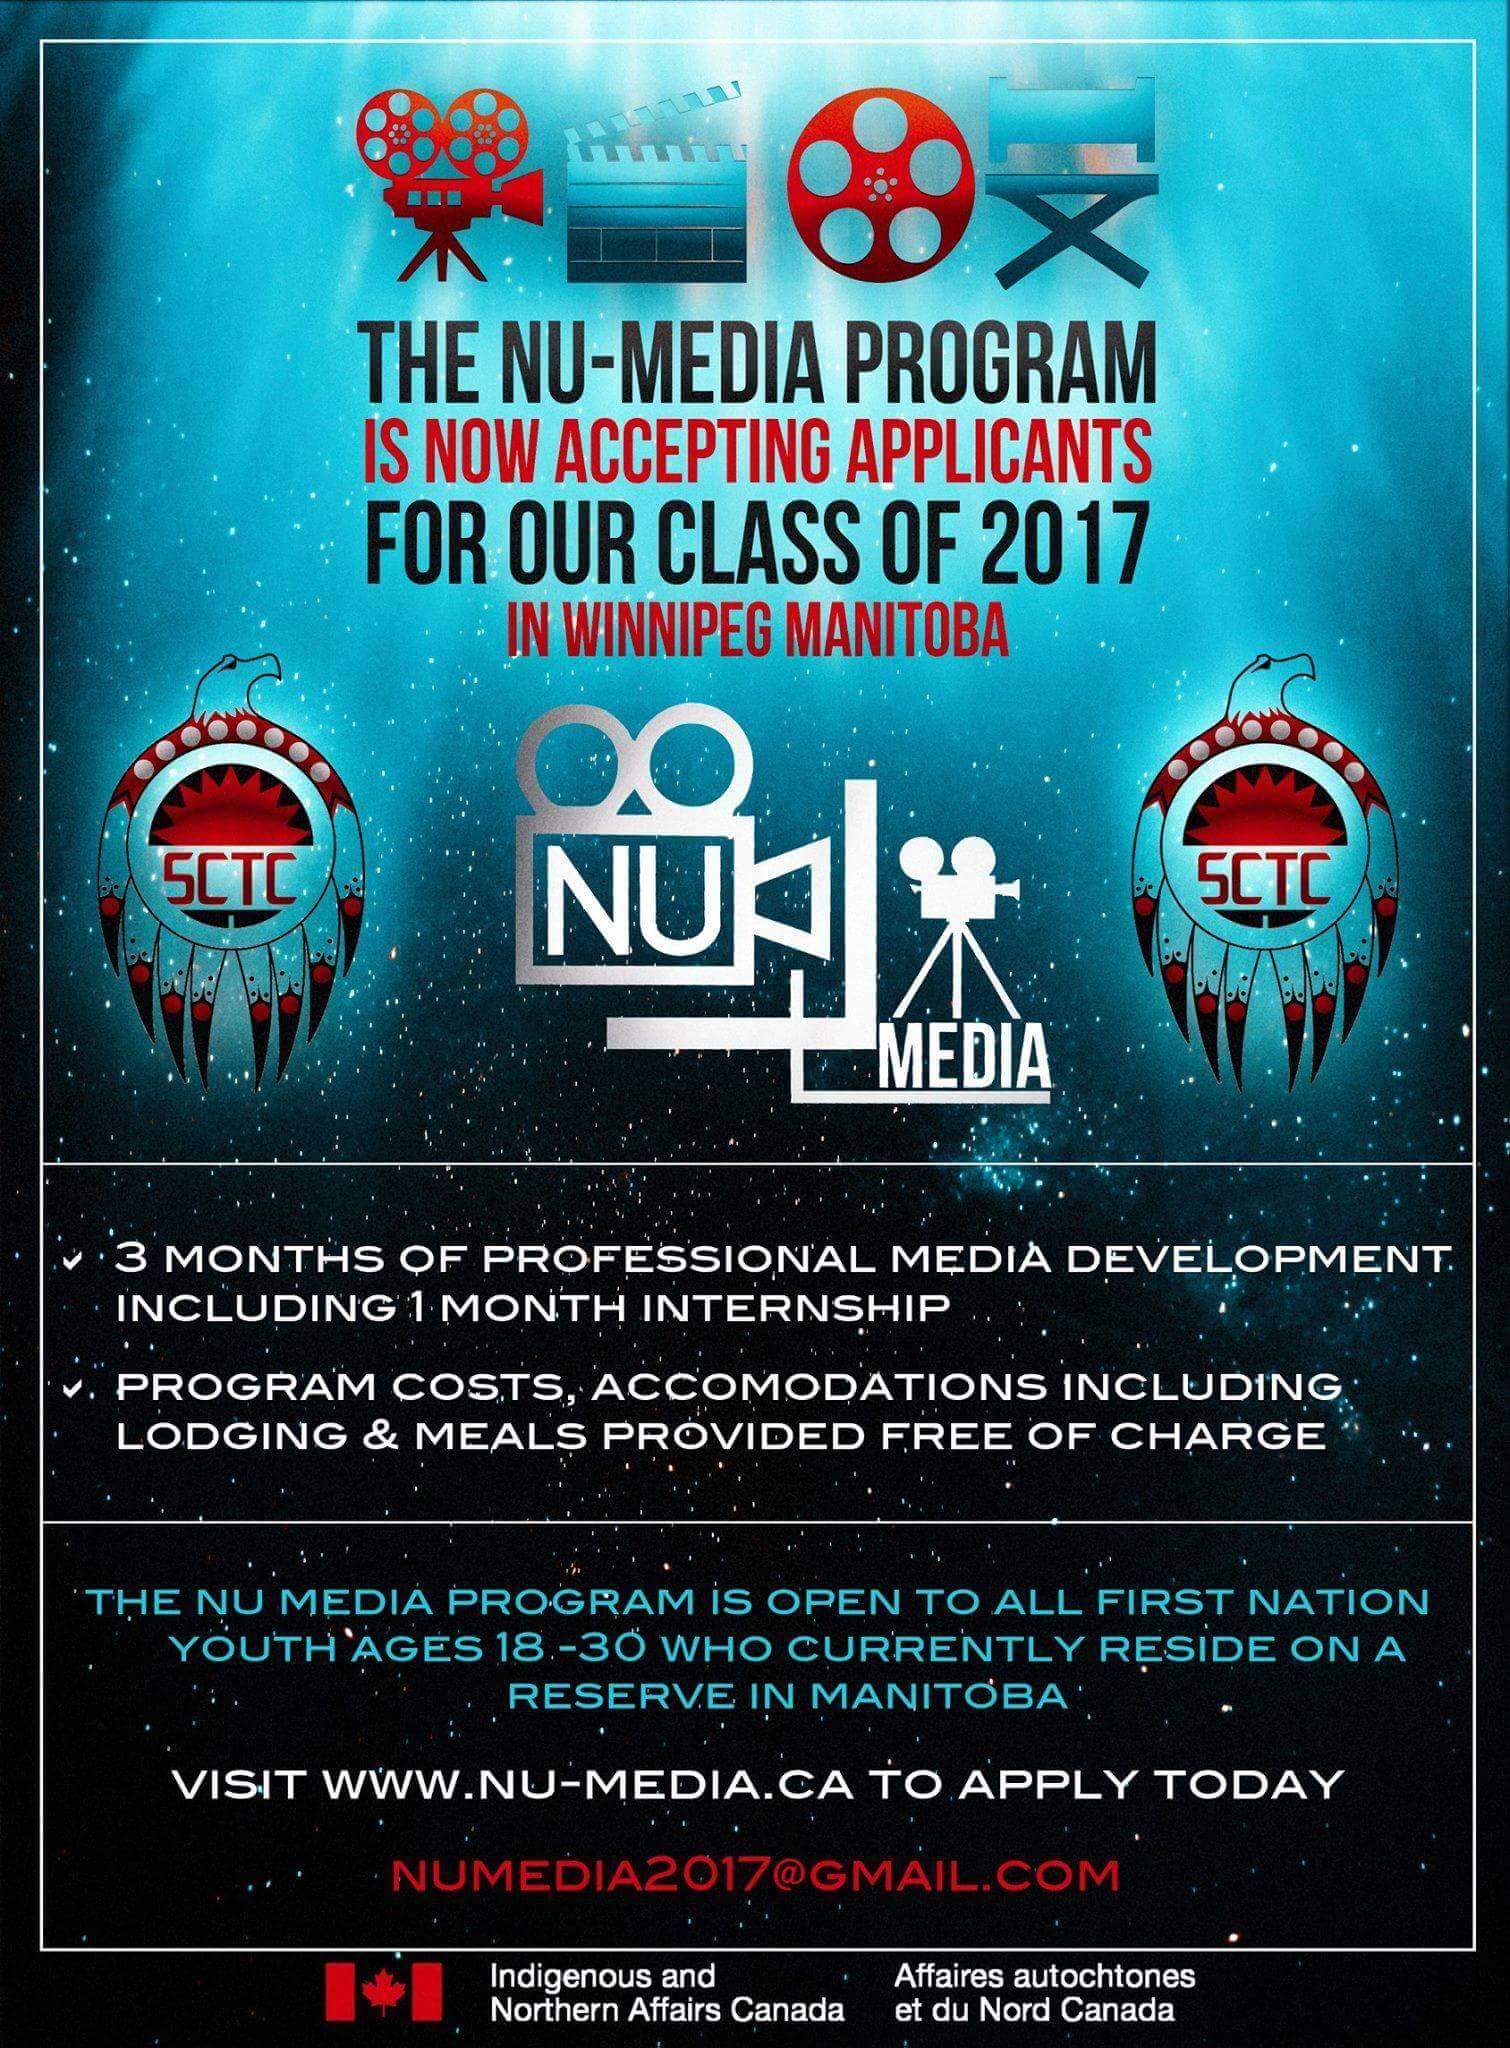 Numedia Manitoba Moonvoices Inc